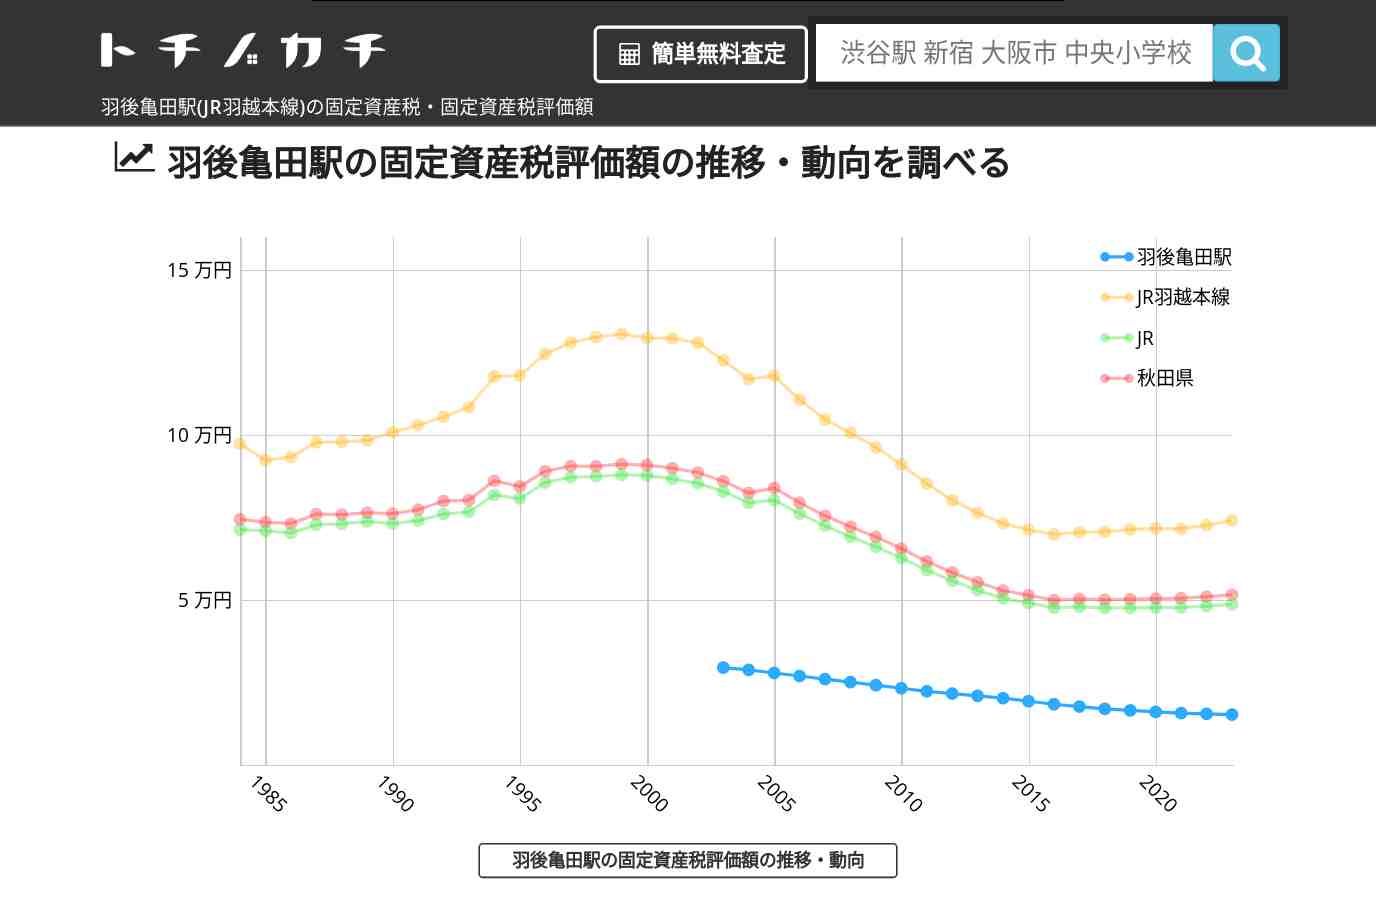 羽後亀田駅(JR羽越本線)の固定資産税・固定資産税評価額 | トチノカチ